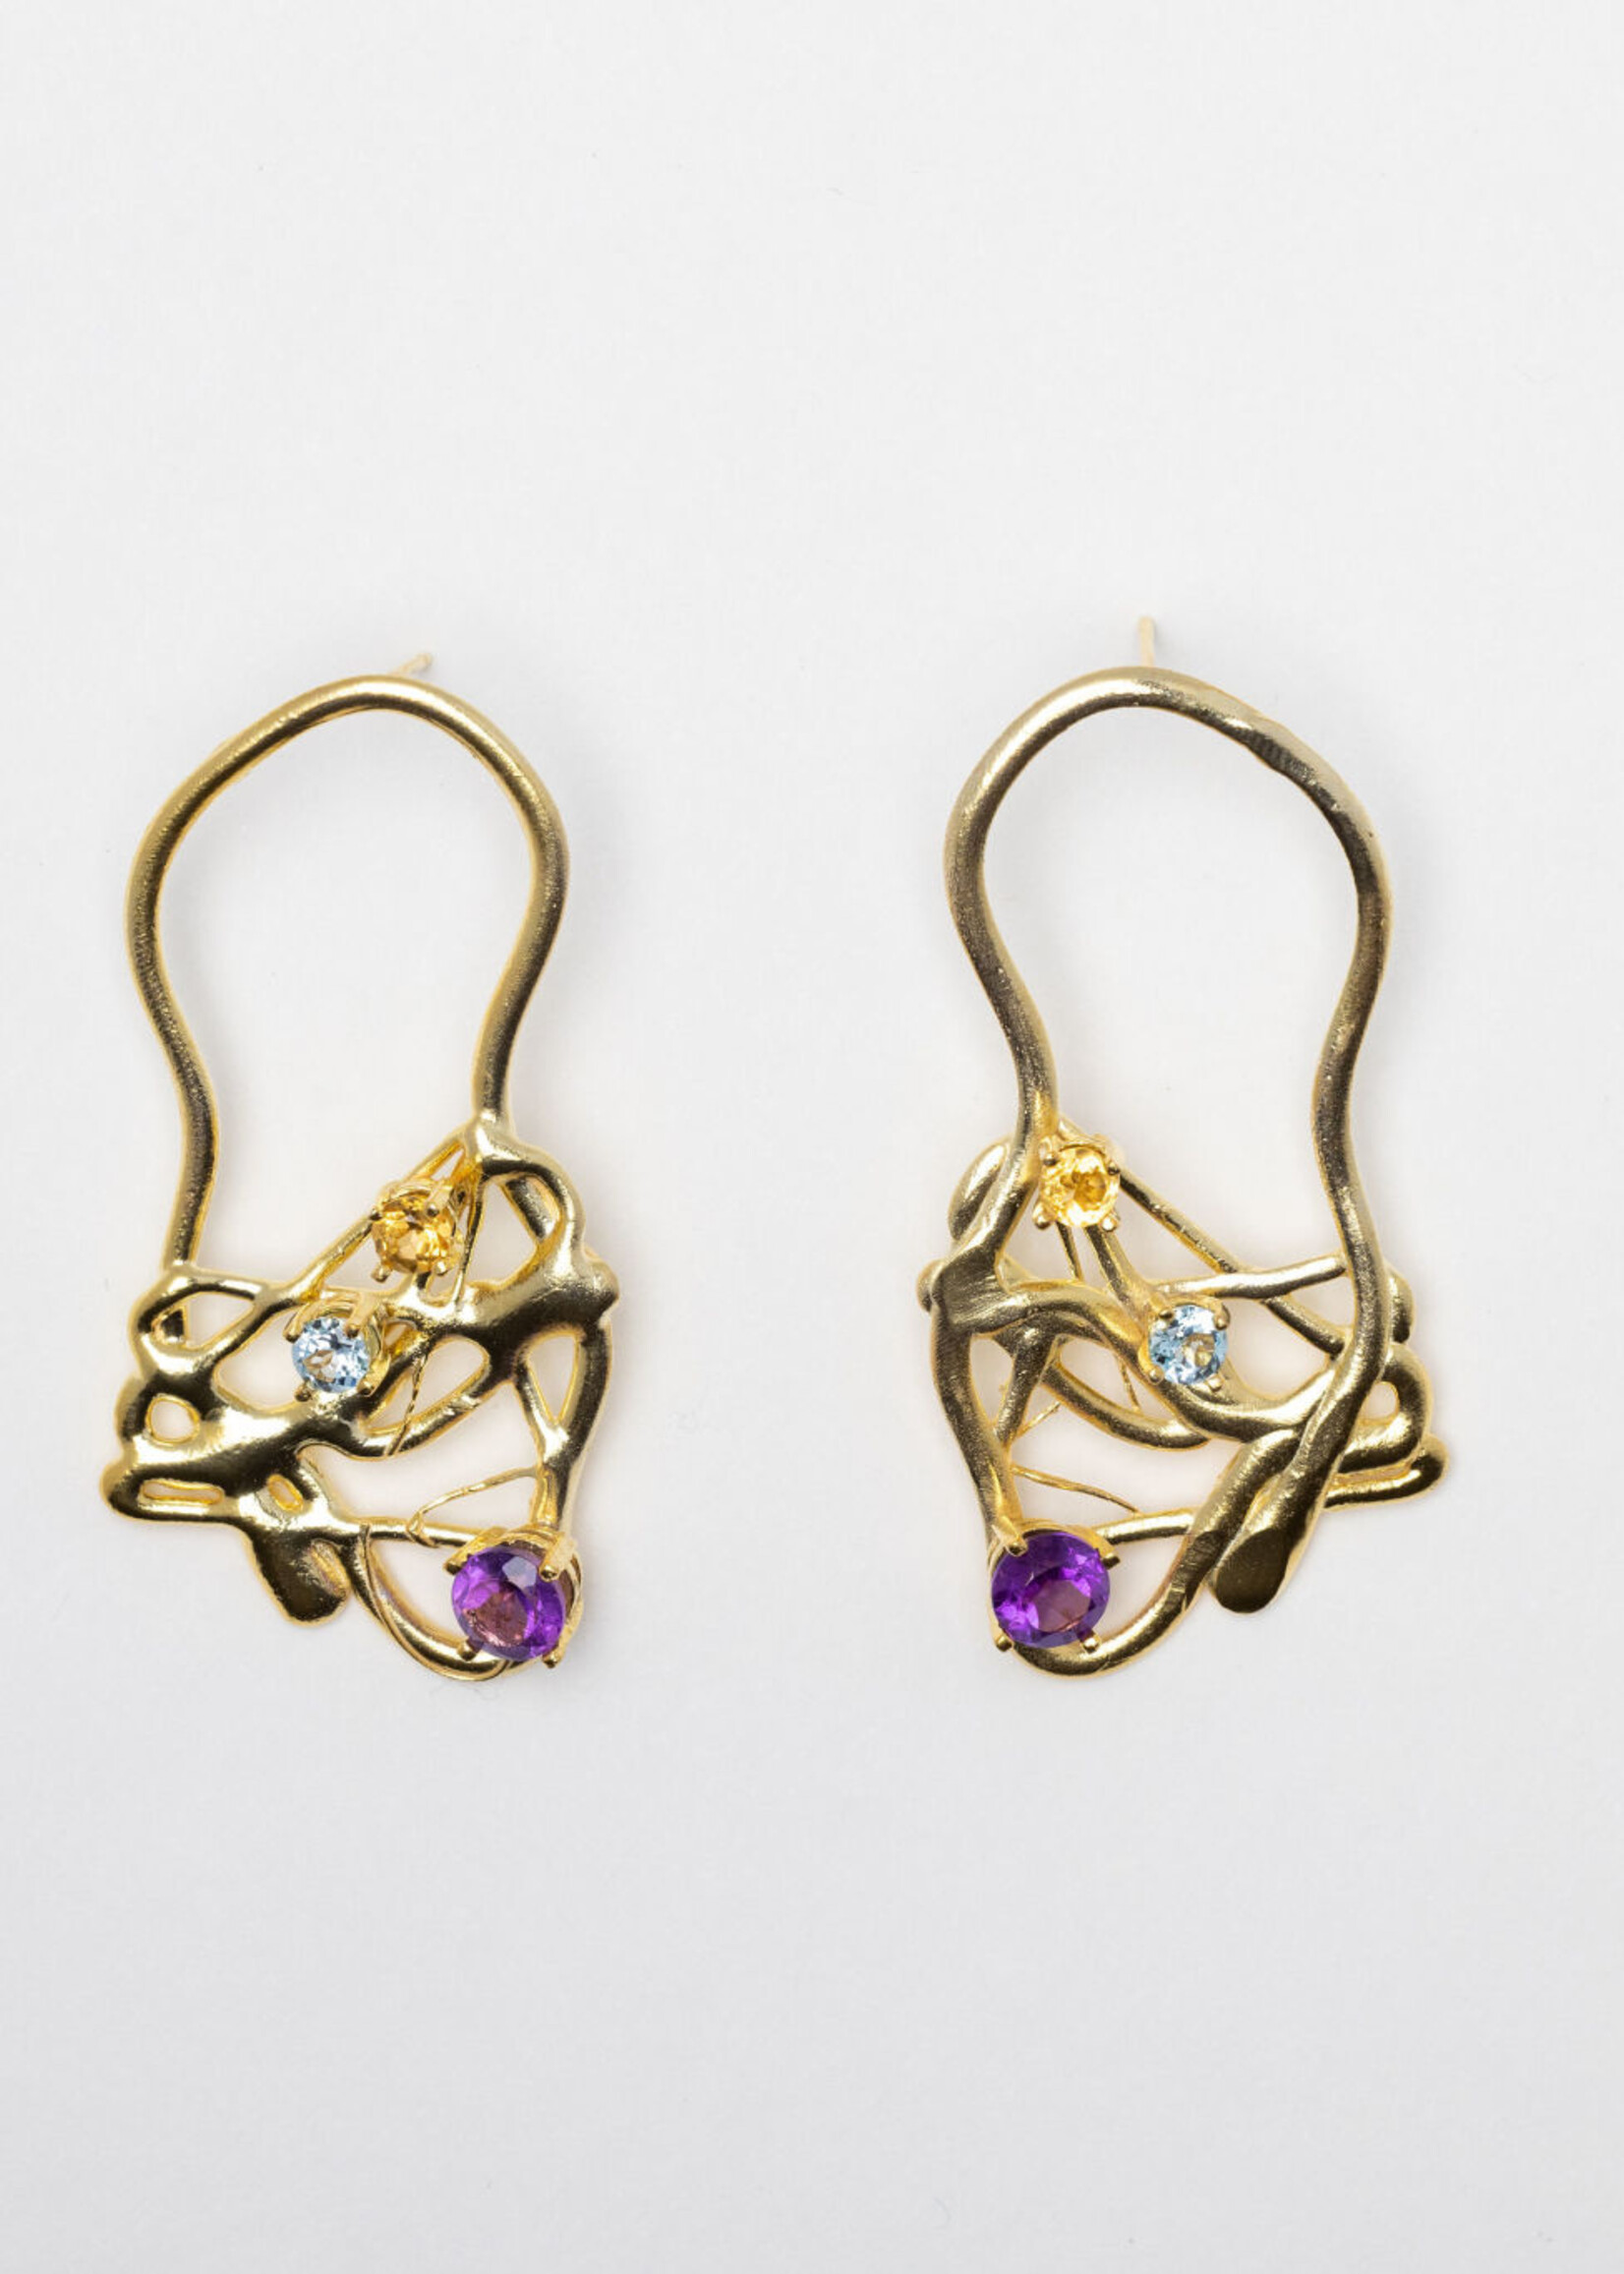 Sydnie Wainland Gold Confetti Oval Earrings